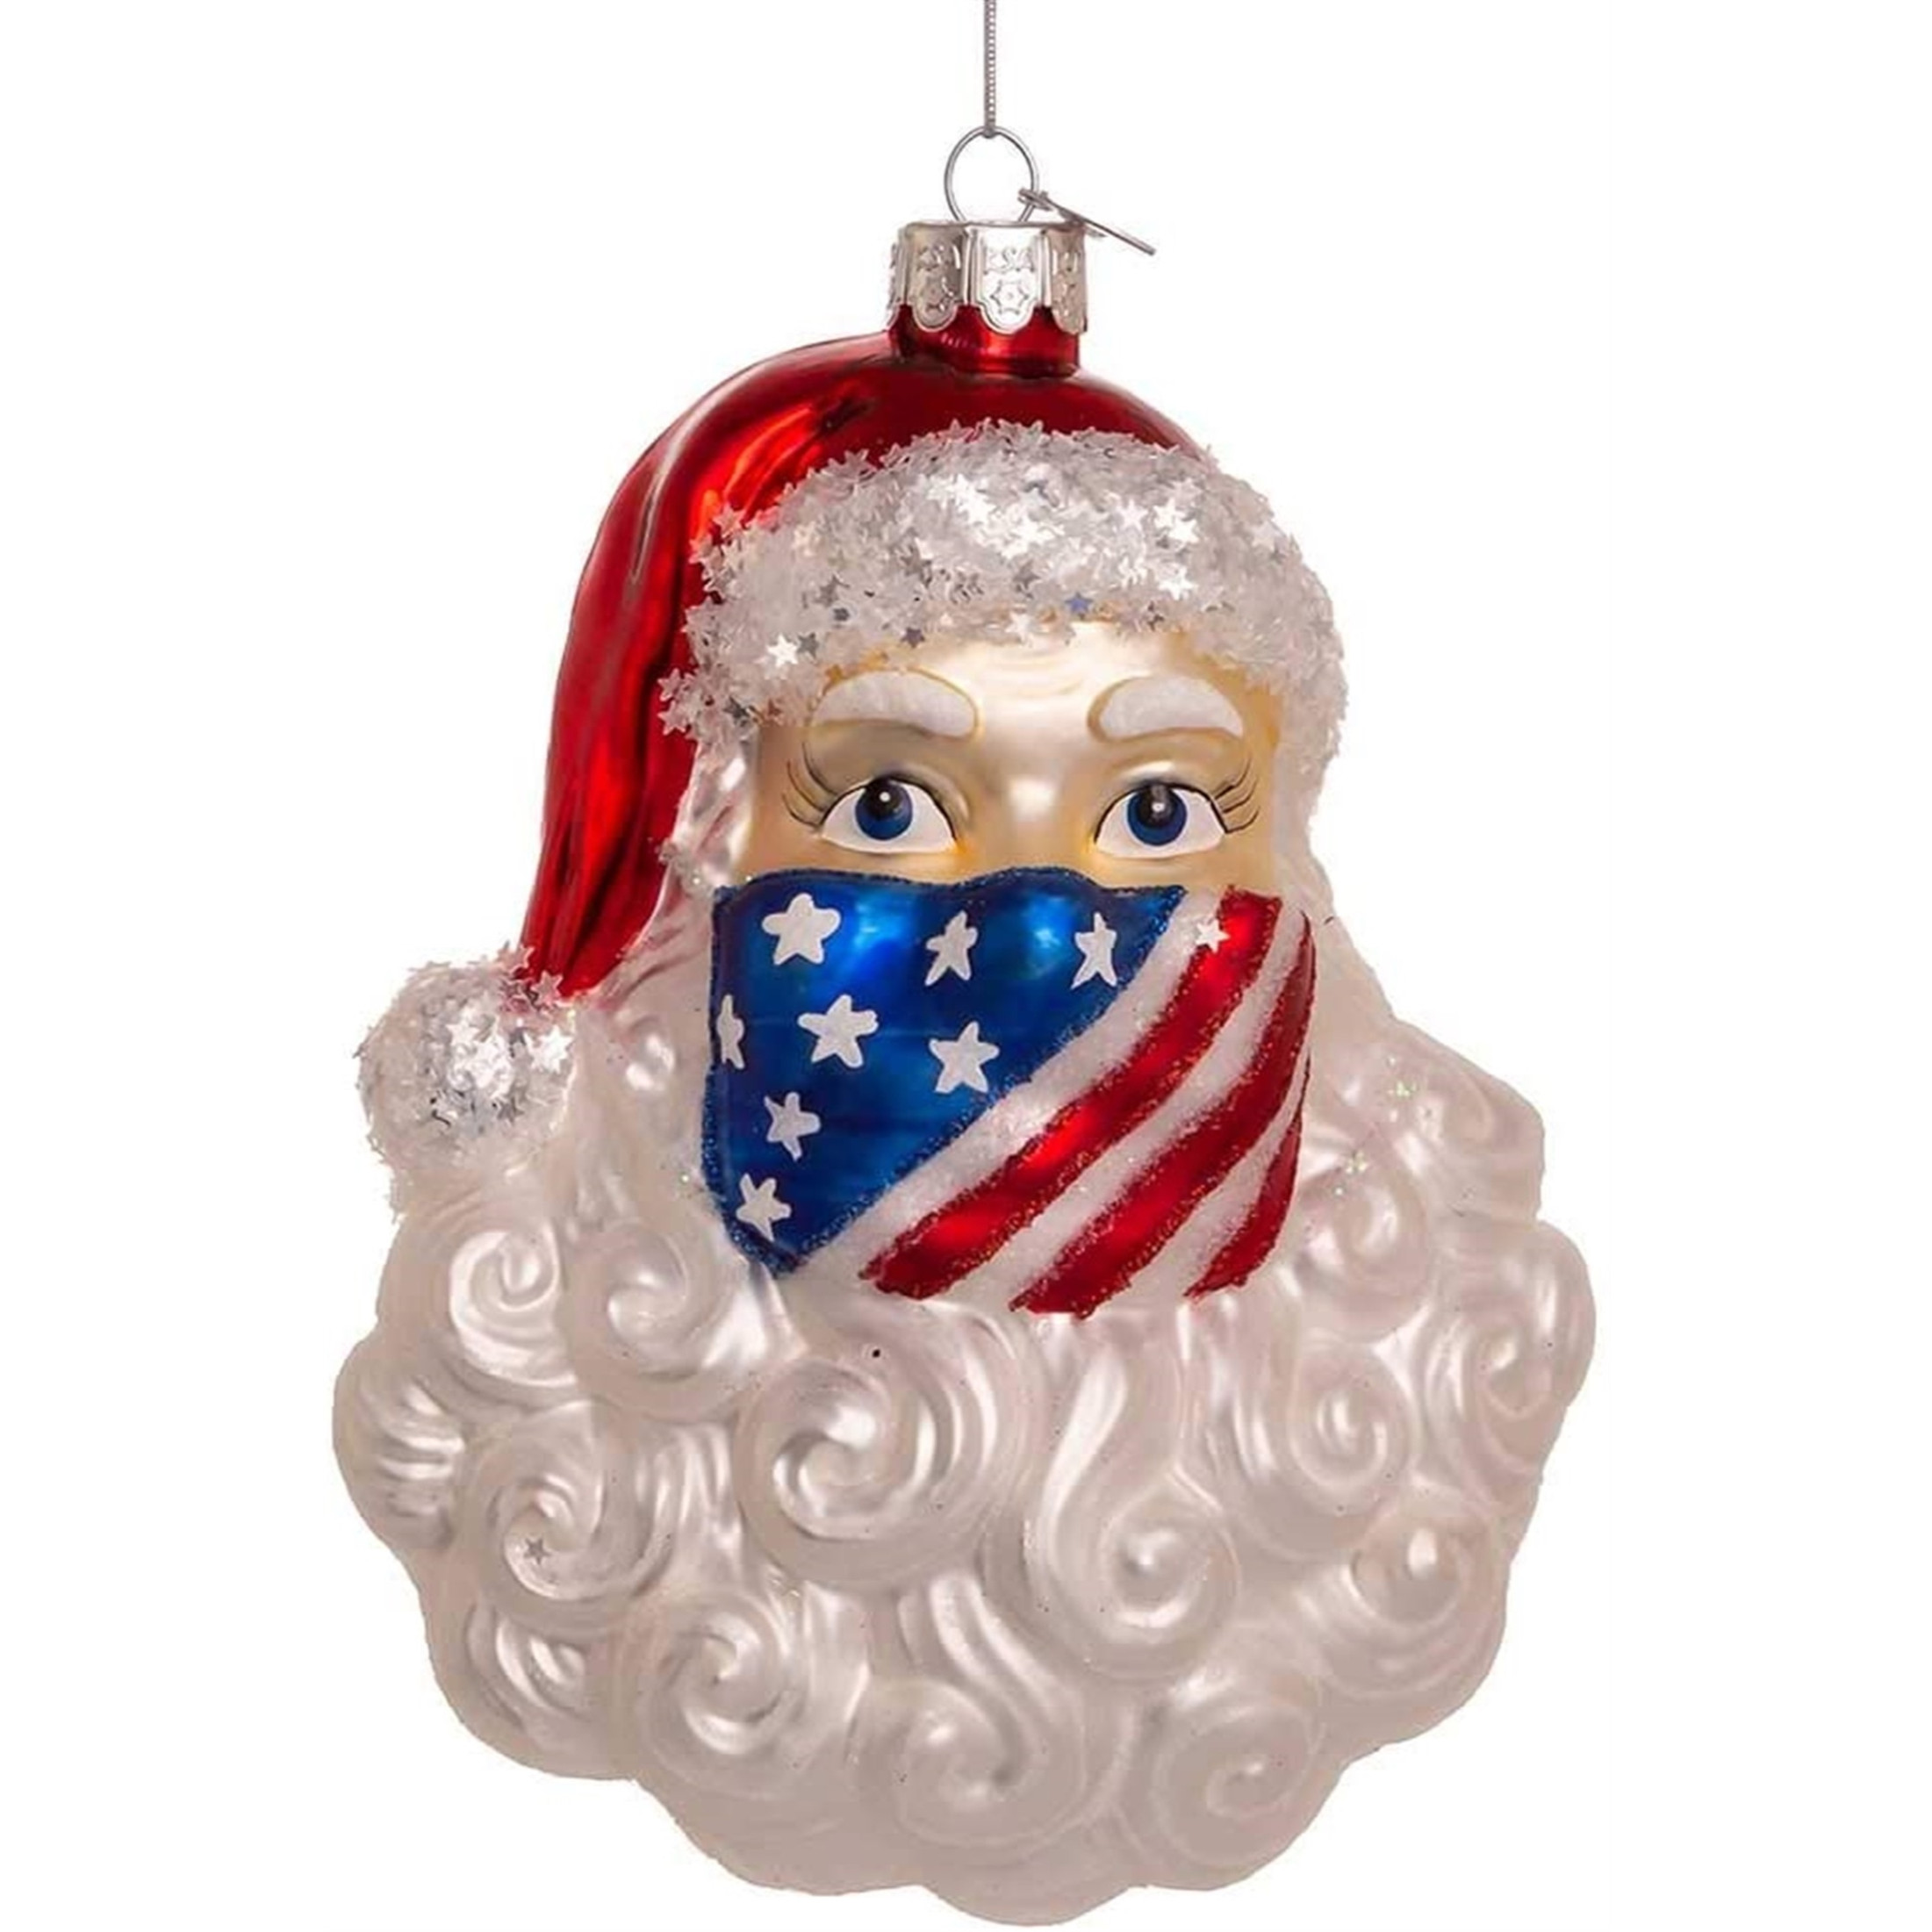 Kurt S. Adler Santa Mask Ornament USA, Multi-Colored, 4.75"